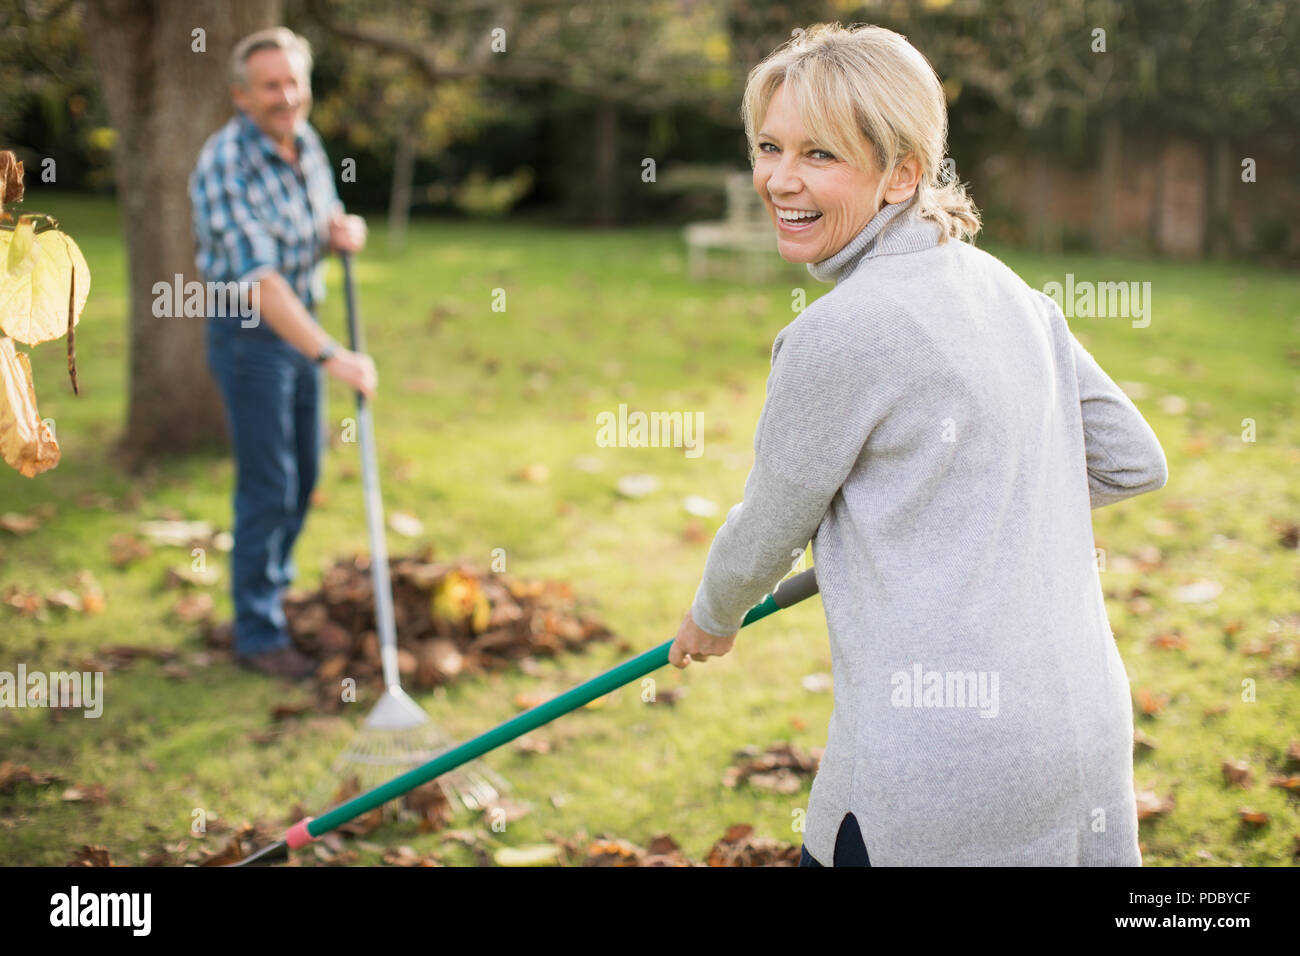 Portrait happy mature woman raking autumn leaves in backyard Stock Photo